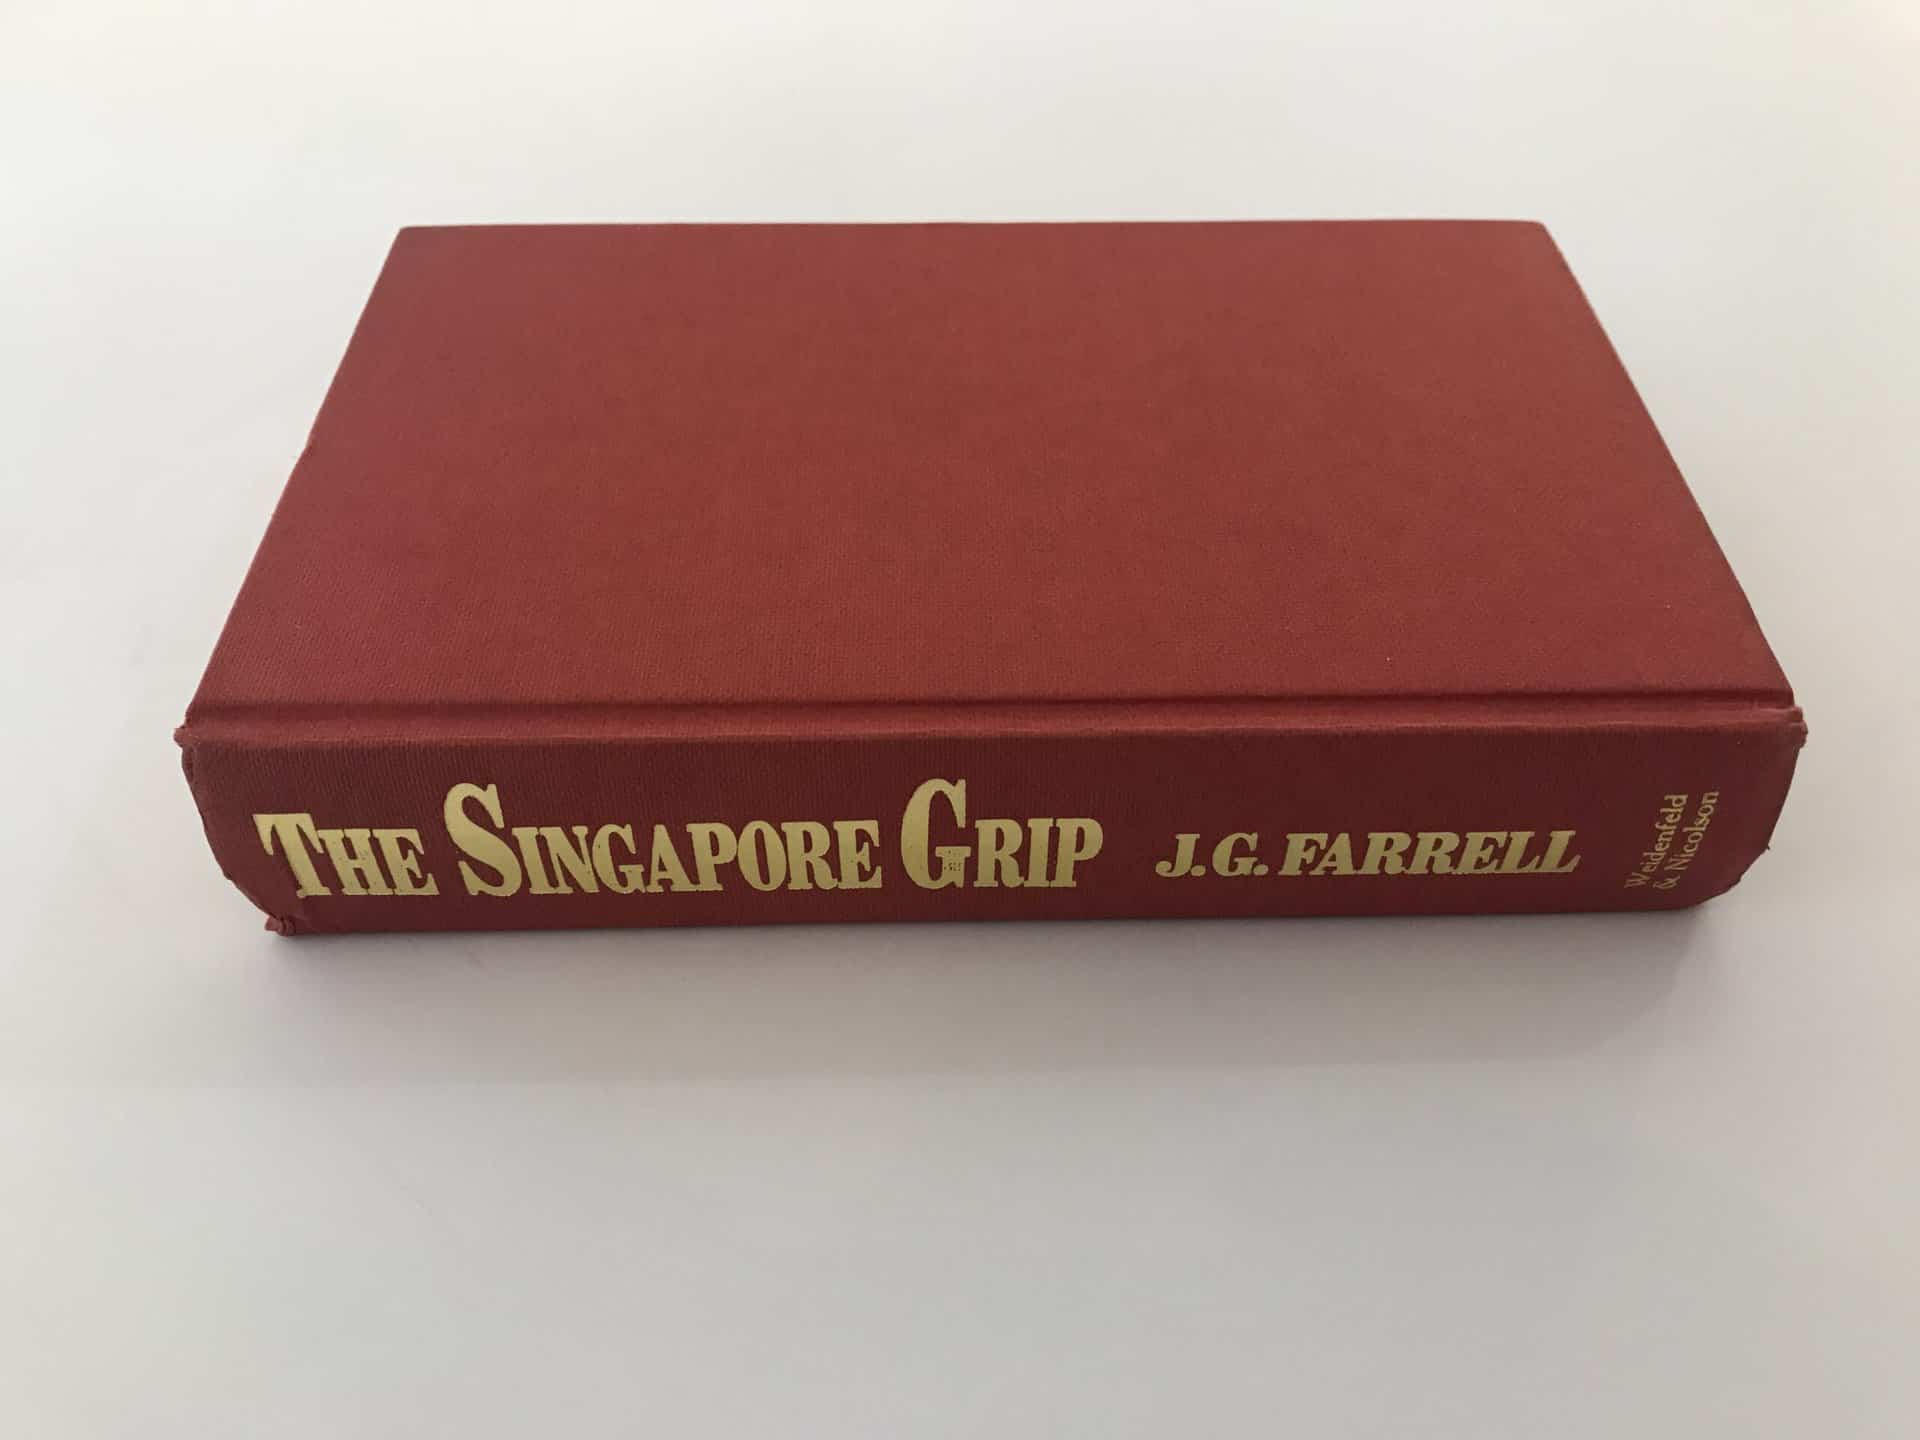 jg farrell the singapore grip first edition3